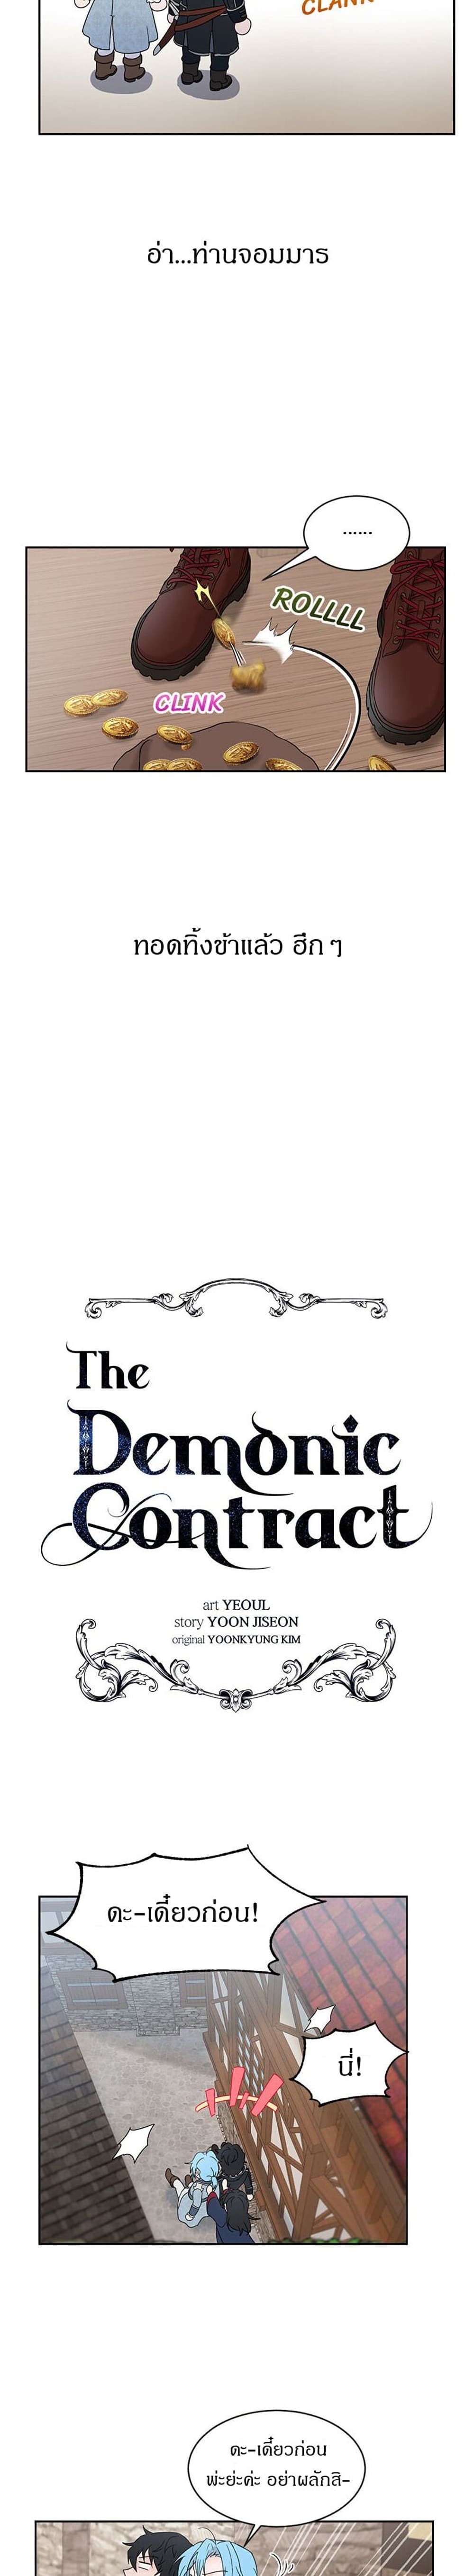 The Demonic Contract18 07